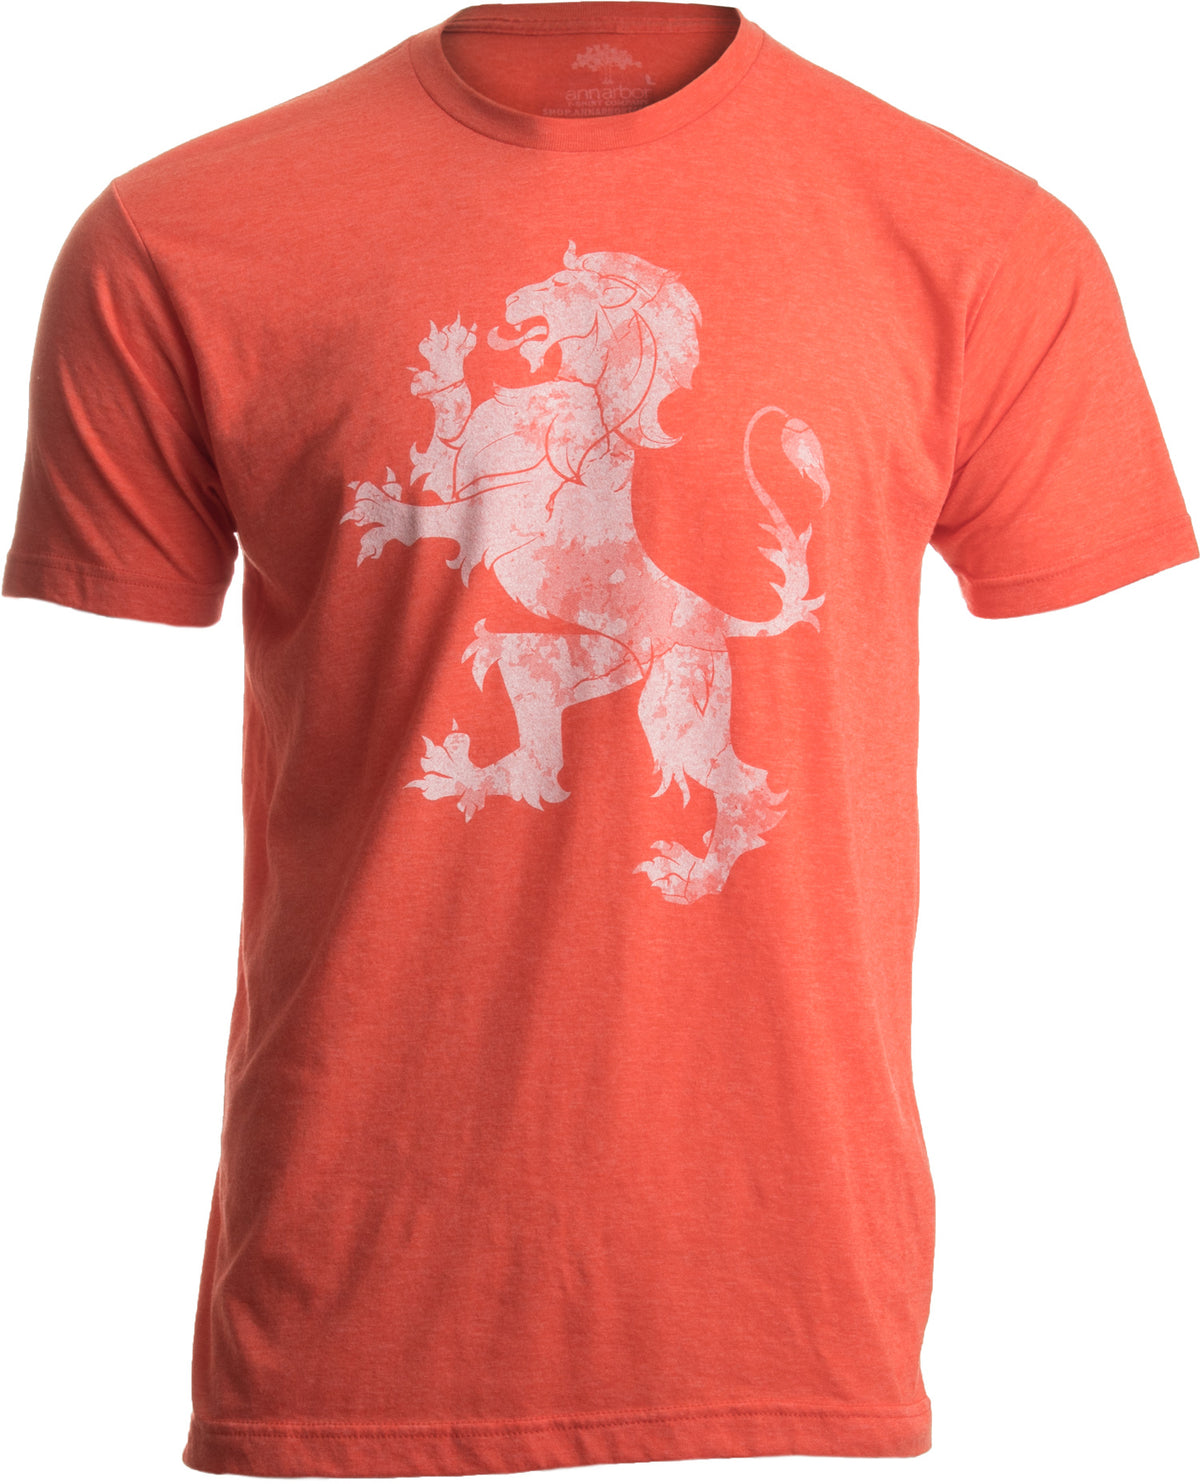 Dutch Pride | Vintage Style, Retro-Feel Netherlands Lion & Flag Unisex T-shirt